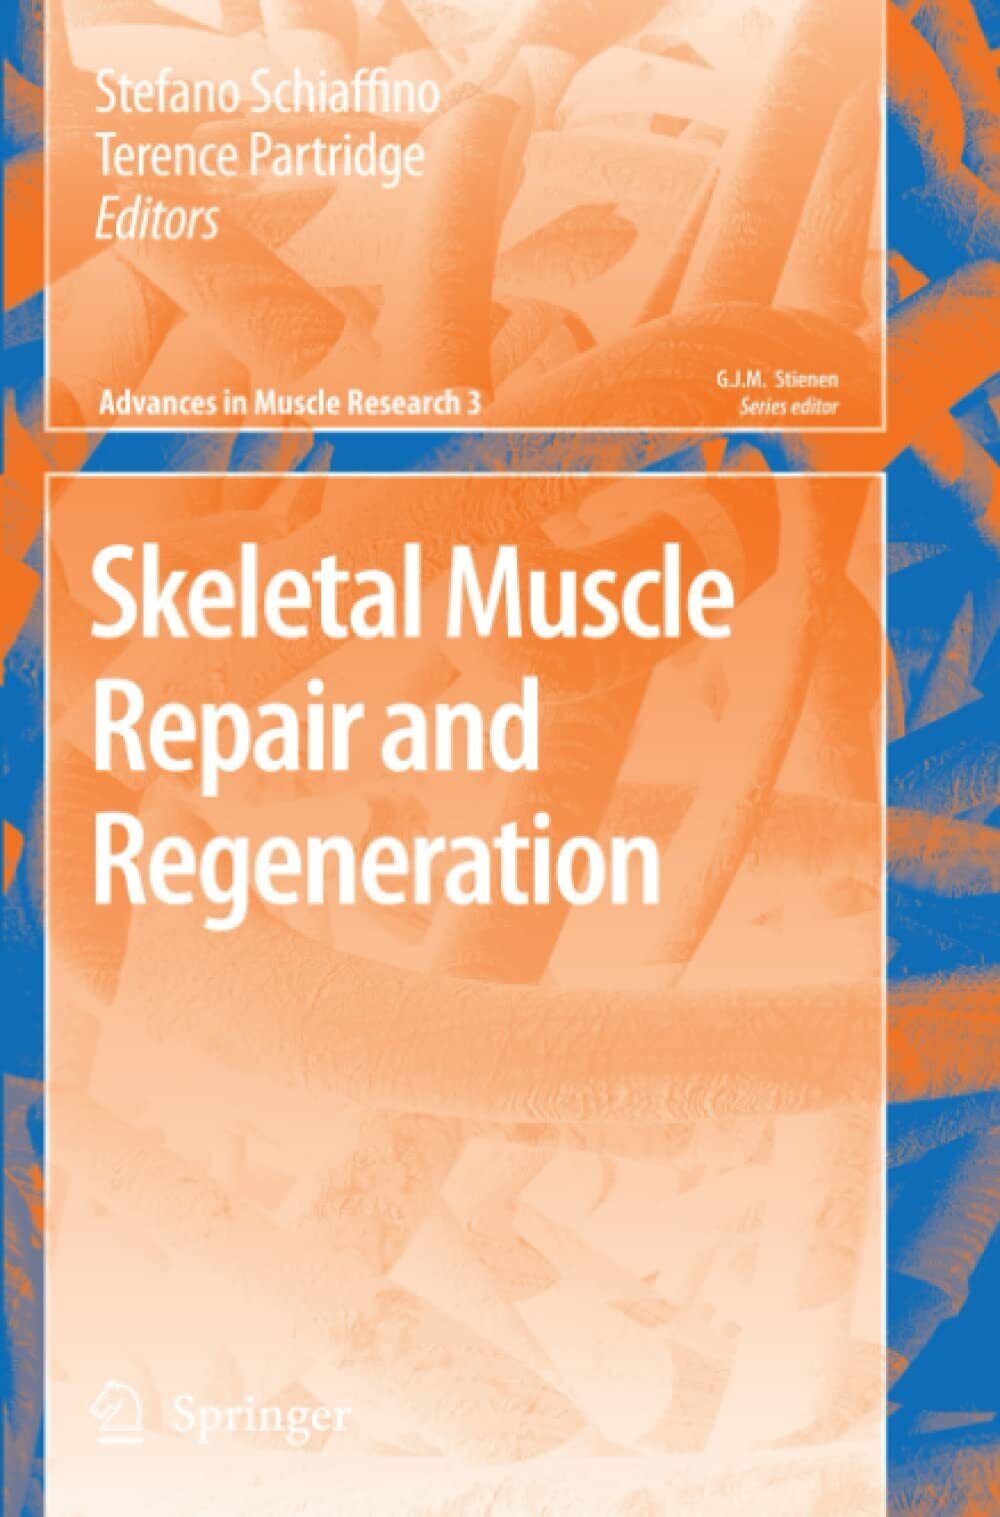 Skeletal Muscle Repair and Regeneration - Stefano Schiaffino - Springer, 2010